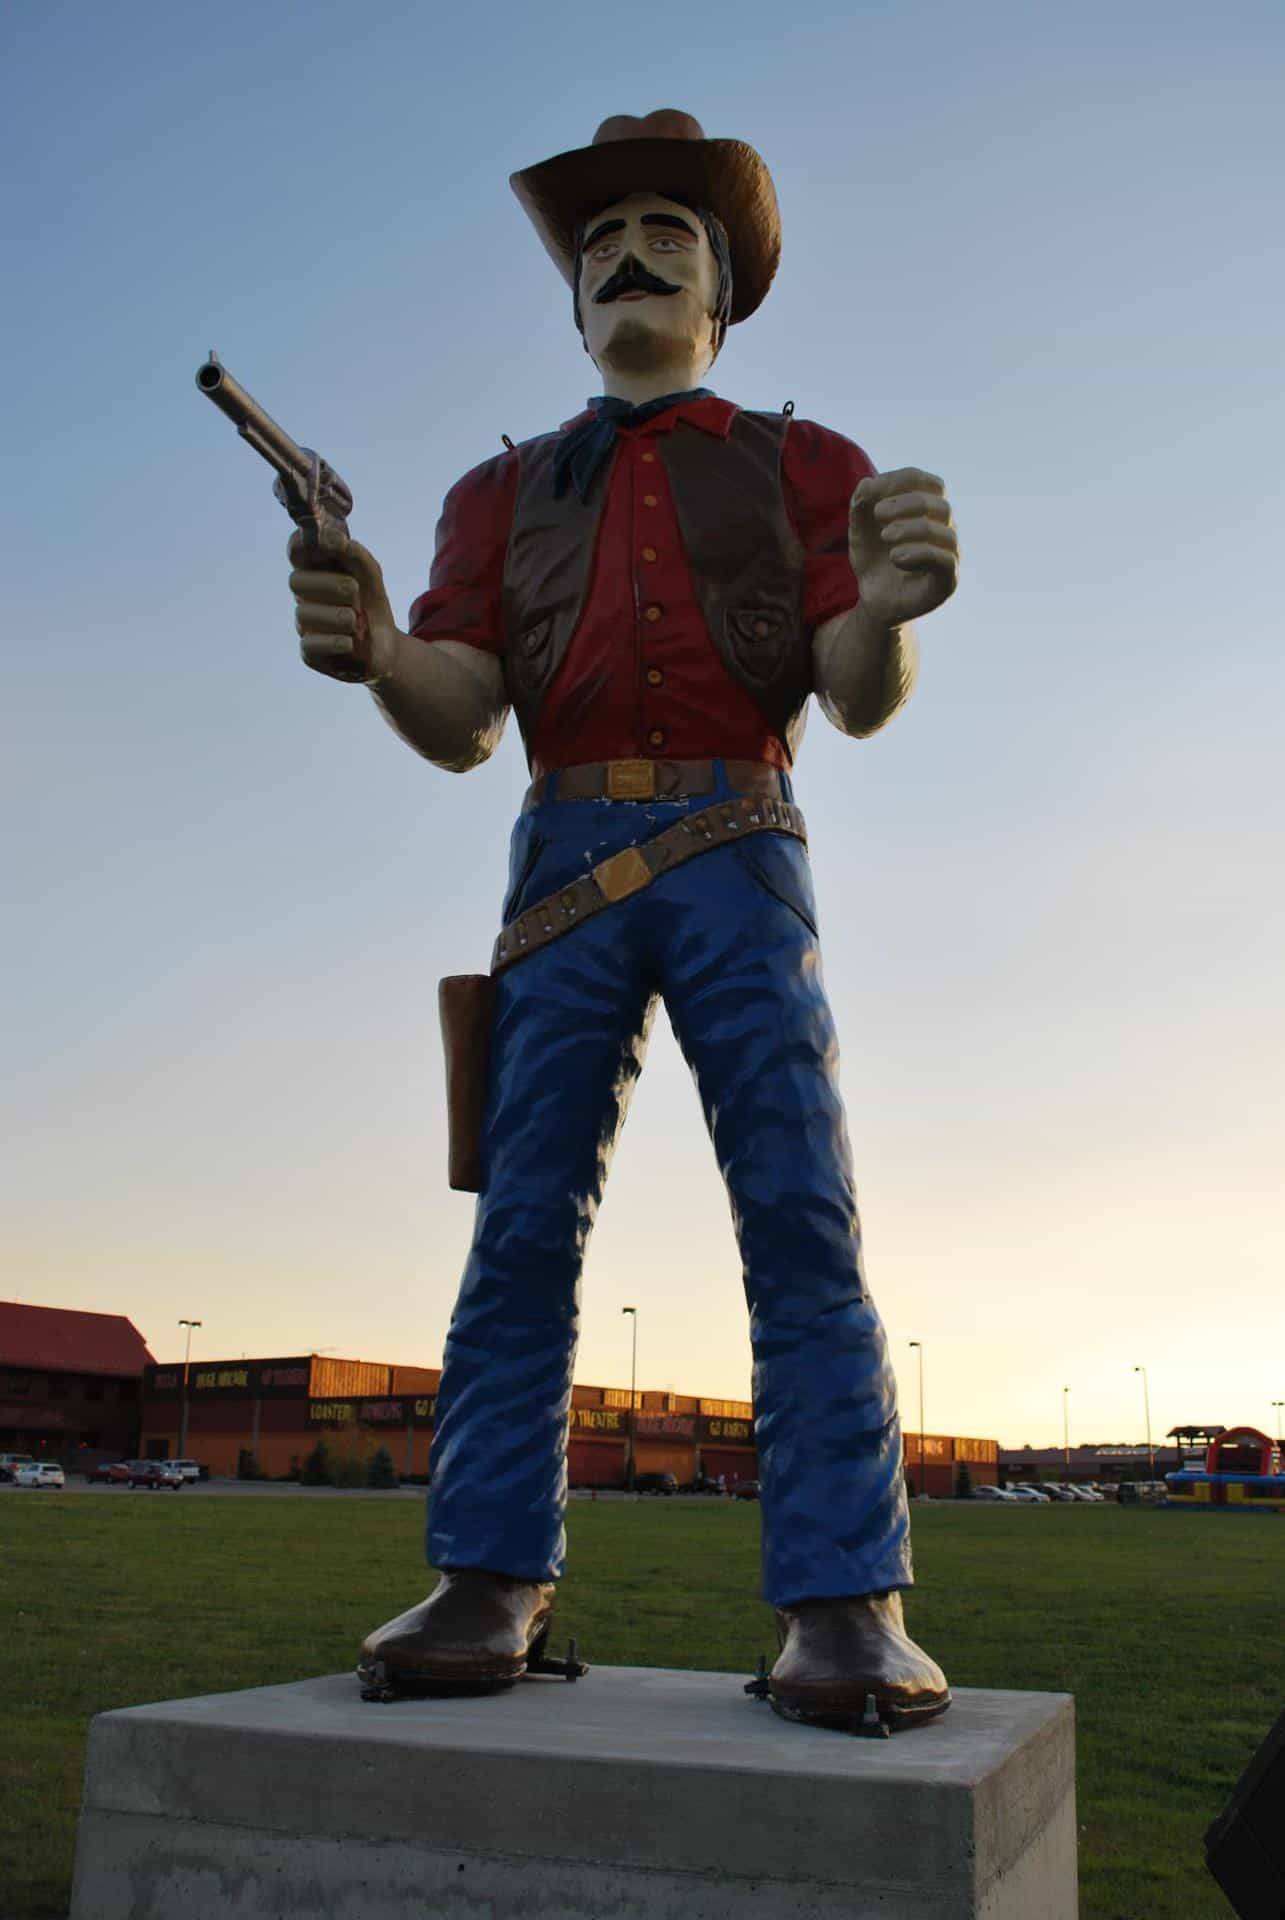 Buffalo Phils Muffler Man Cowboy Wisconsin Dells Midwest Family Traveler